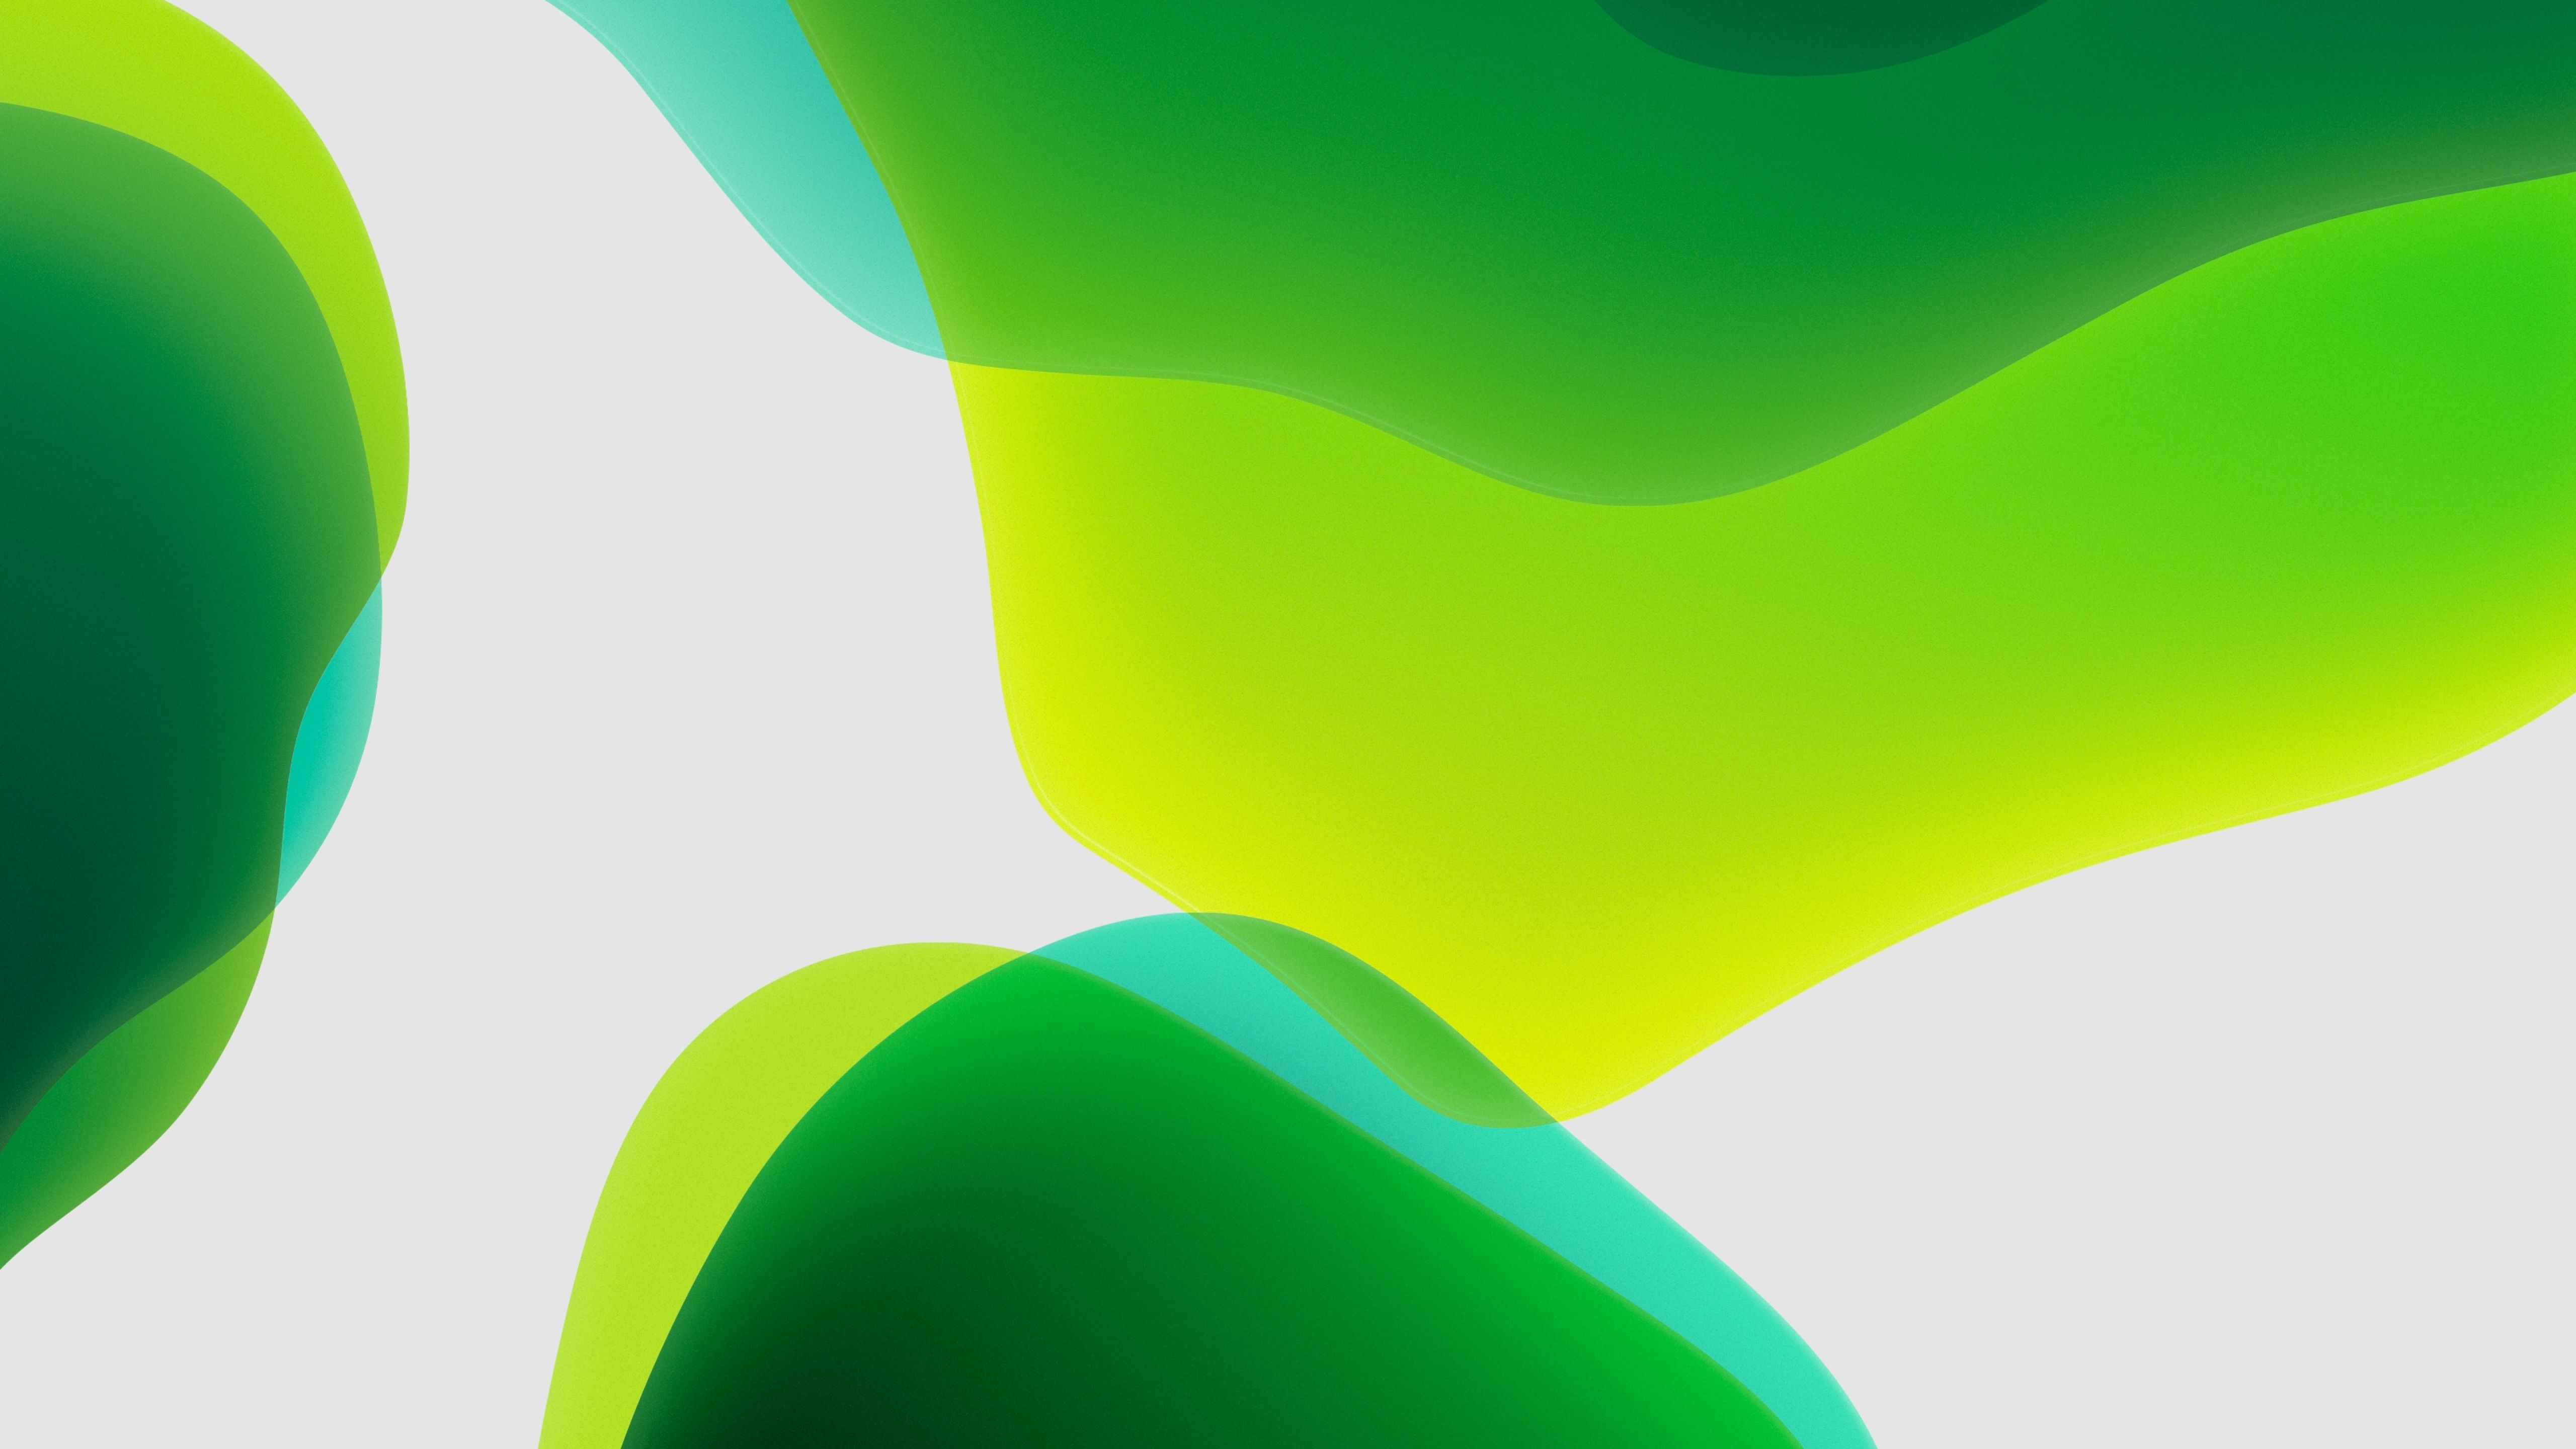 iPadOS Wallpaper 4K, Stock, Green, Abstract, #1549